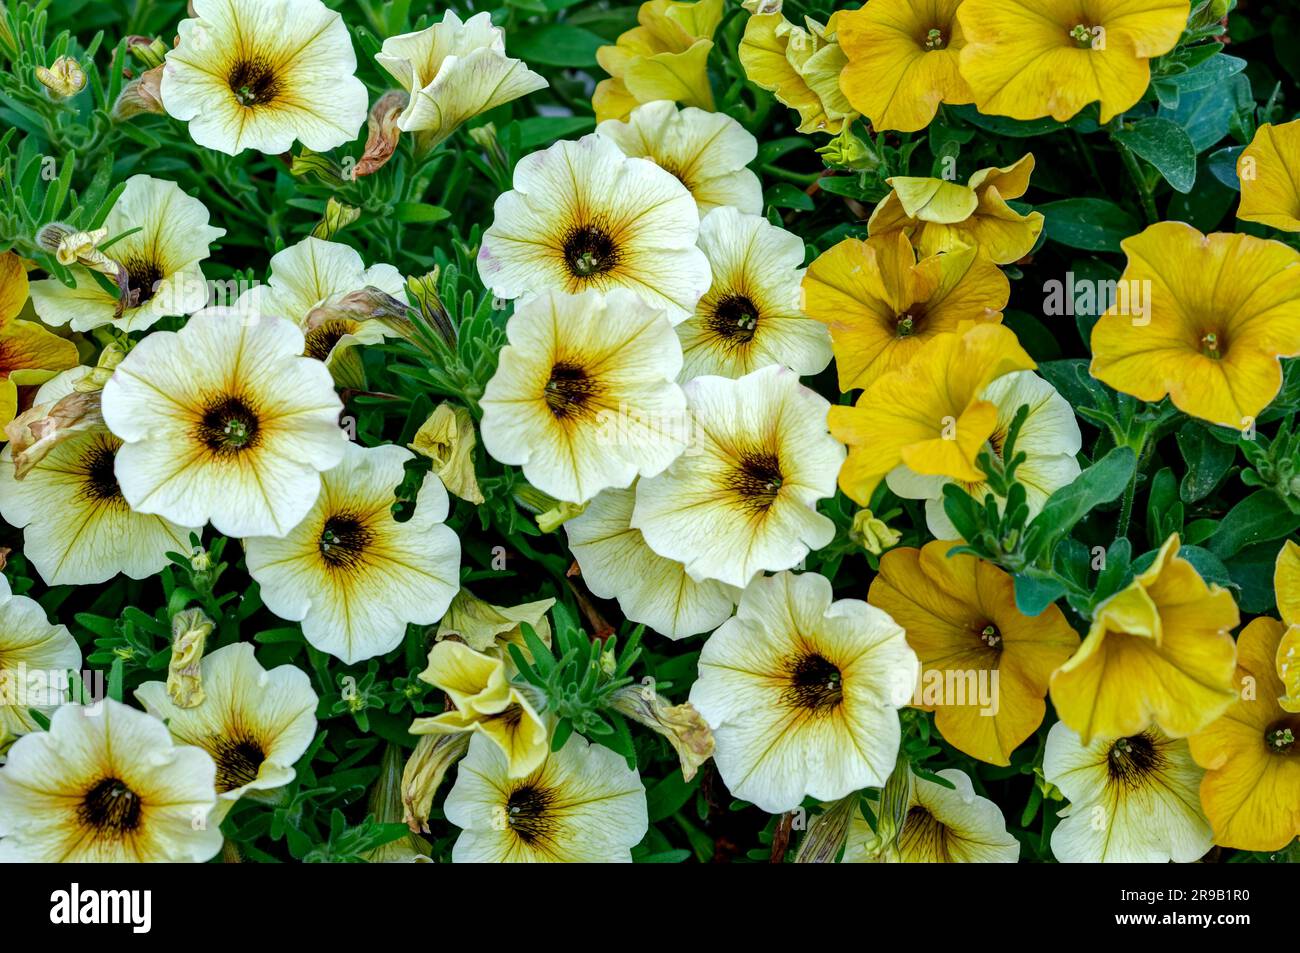 Petunia ornamental flowers in natural habitat in full bloom from close range, elegant colorful plants Stock Photo